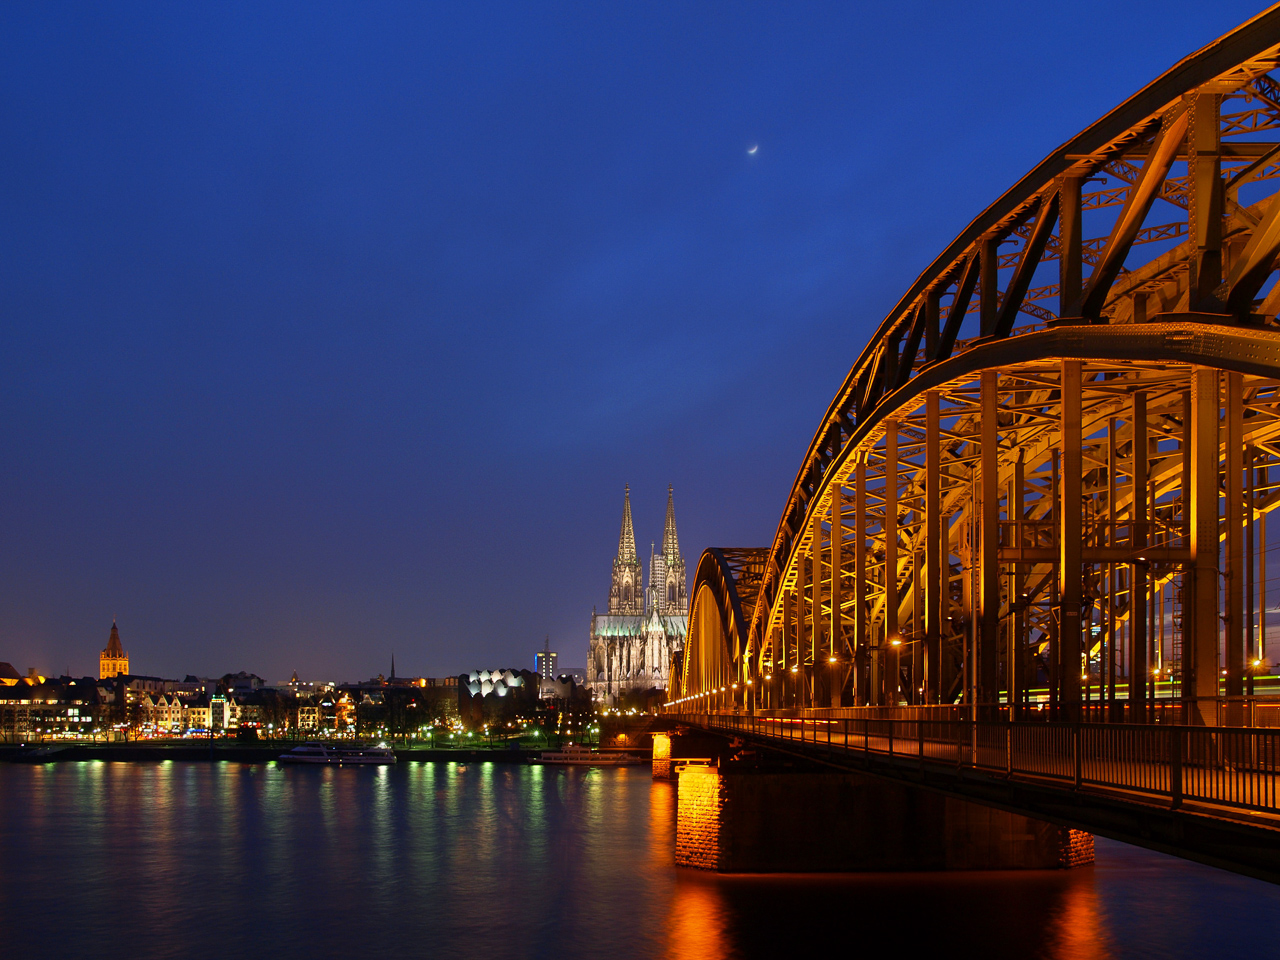 Hohenzollernbrücke